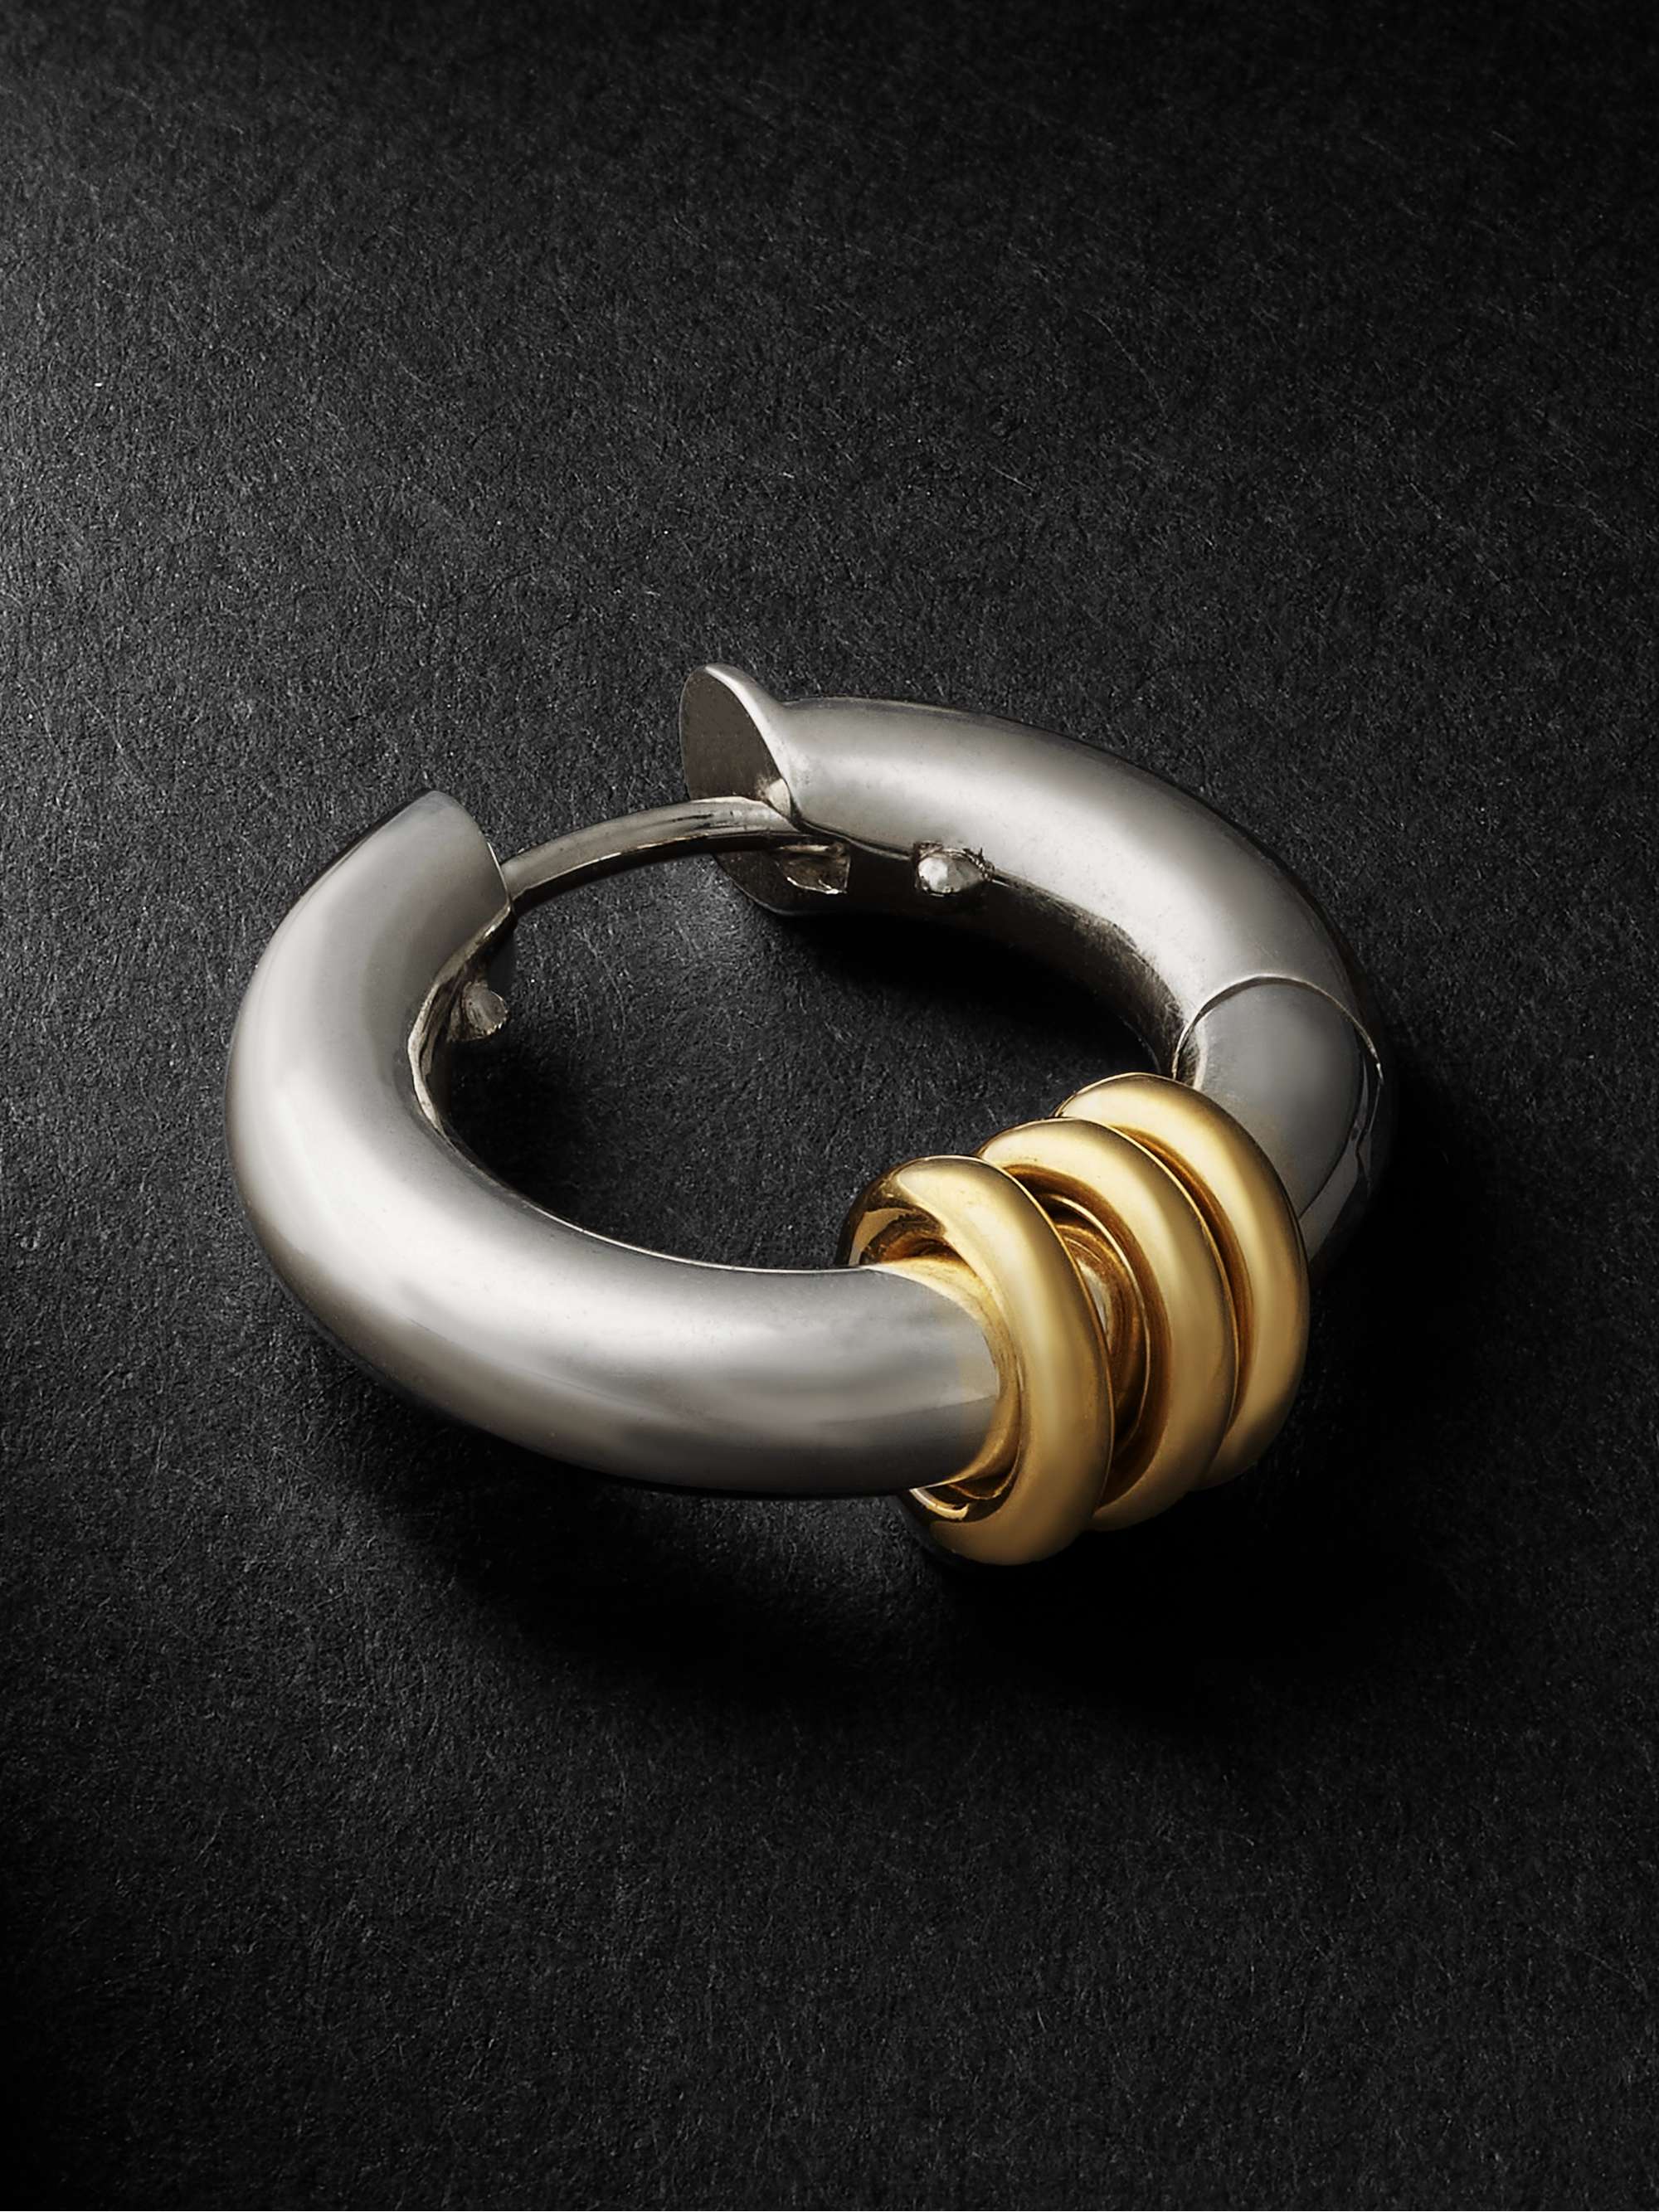 Atterley Accessories Jewelry Earrings Hoop Pill Hoop Earring 2 Tone Silver and Gold on Silver Hoop 